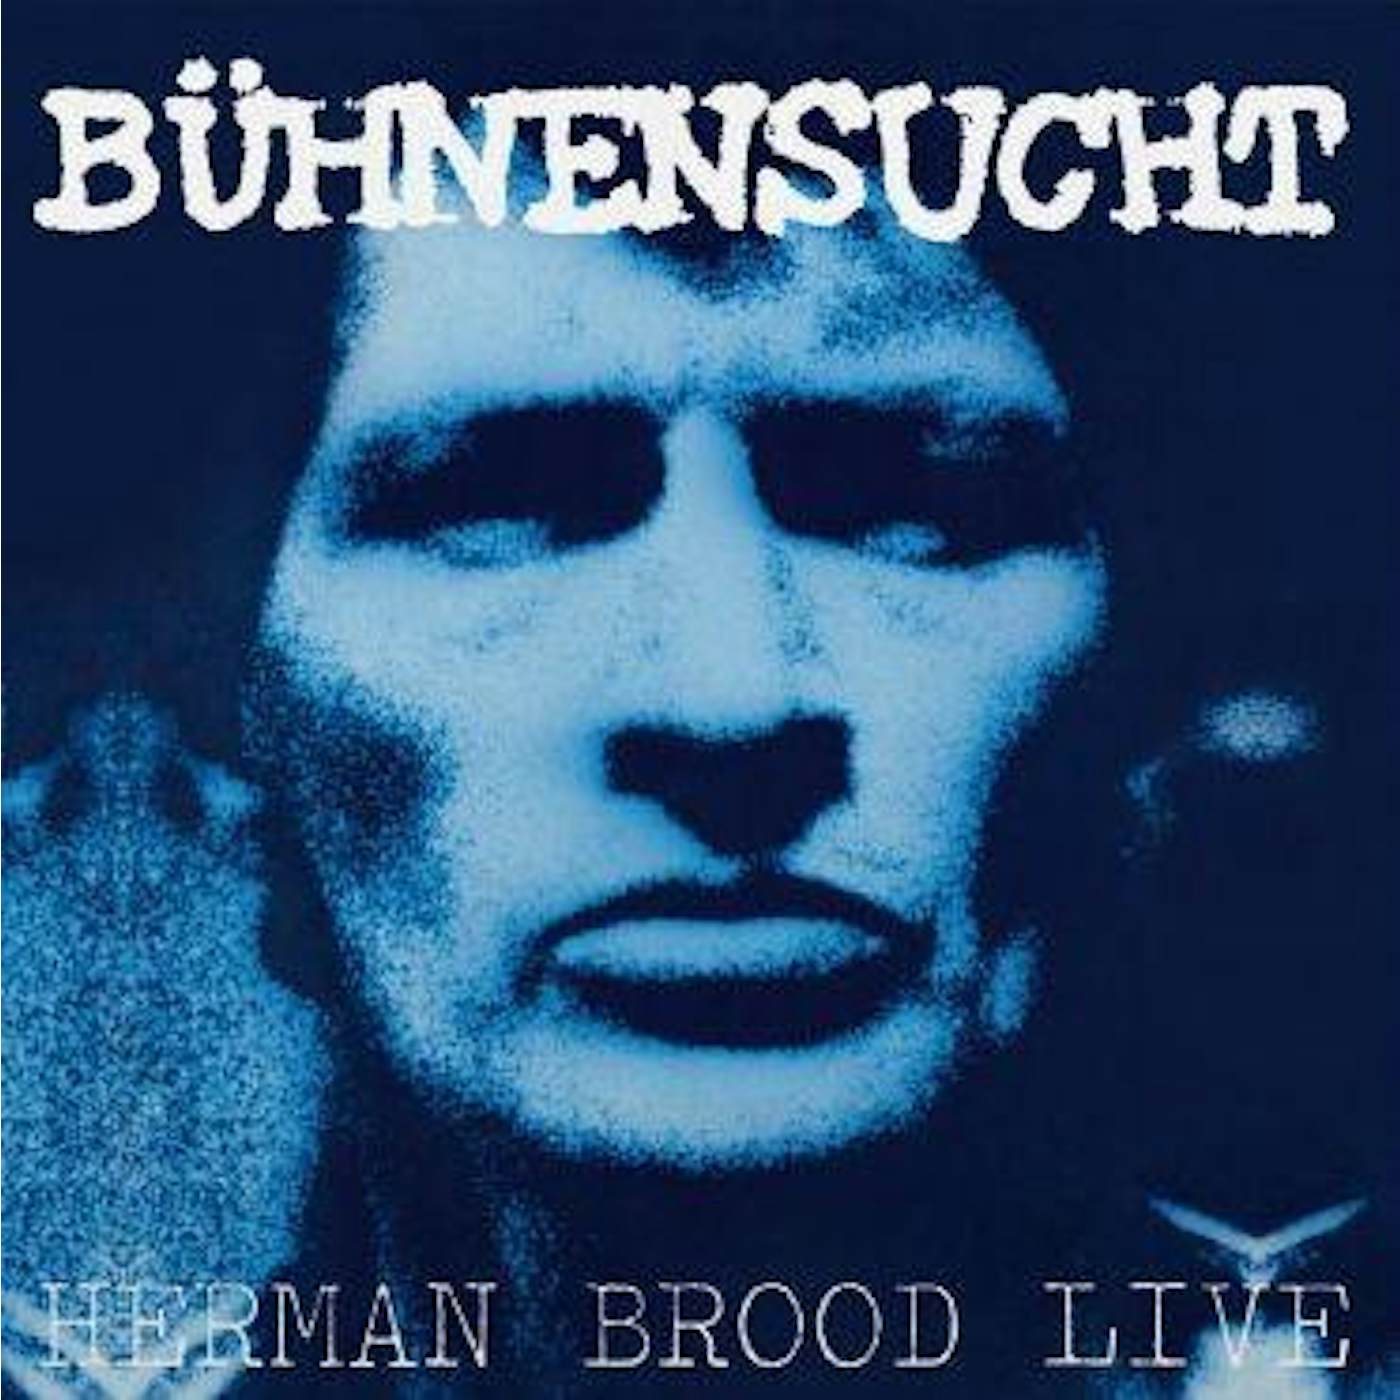 Herman Brood Buhnensucht / LIVE Vinyl Record